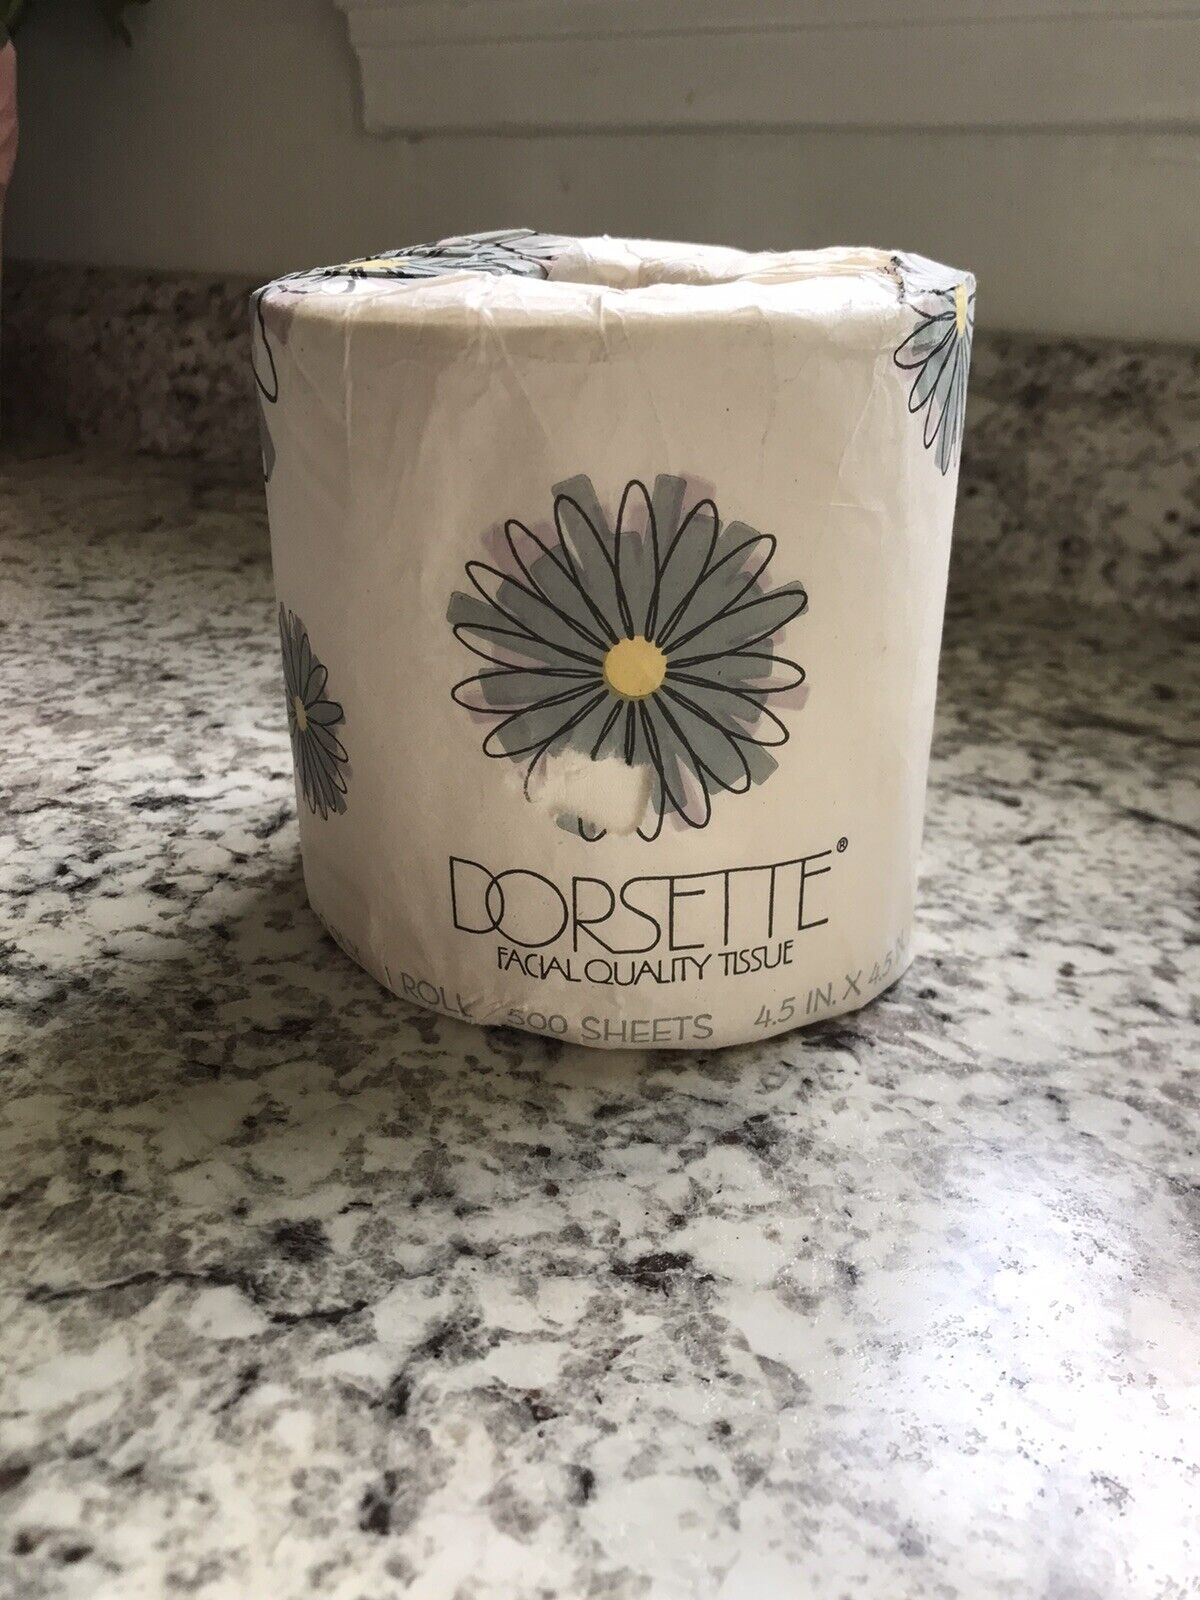 Vintage 1970s Toilet Paper Roll of Dixie Dorsette Tissue Bathroom NOS Film prop?